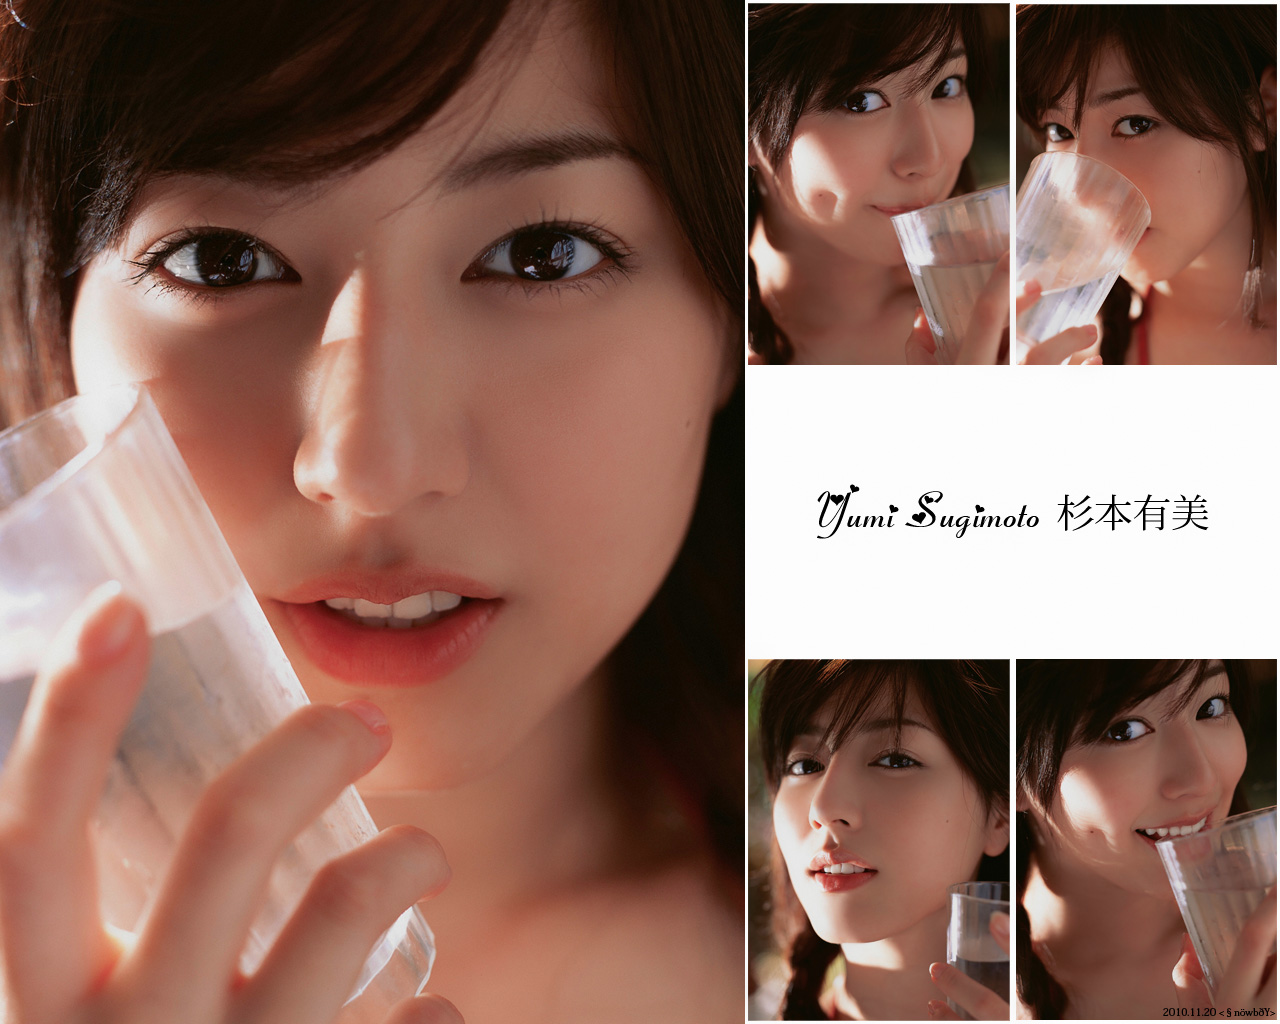 Download HQ Yumi Sugimoto wallpaper / Celebrities Female / 1280x1024